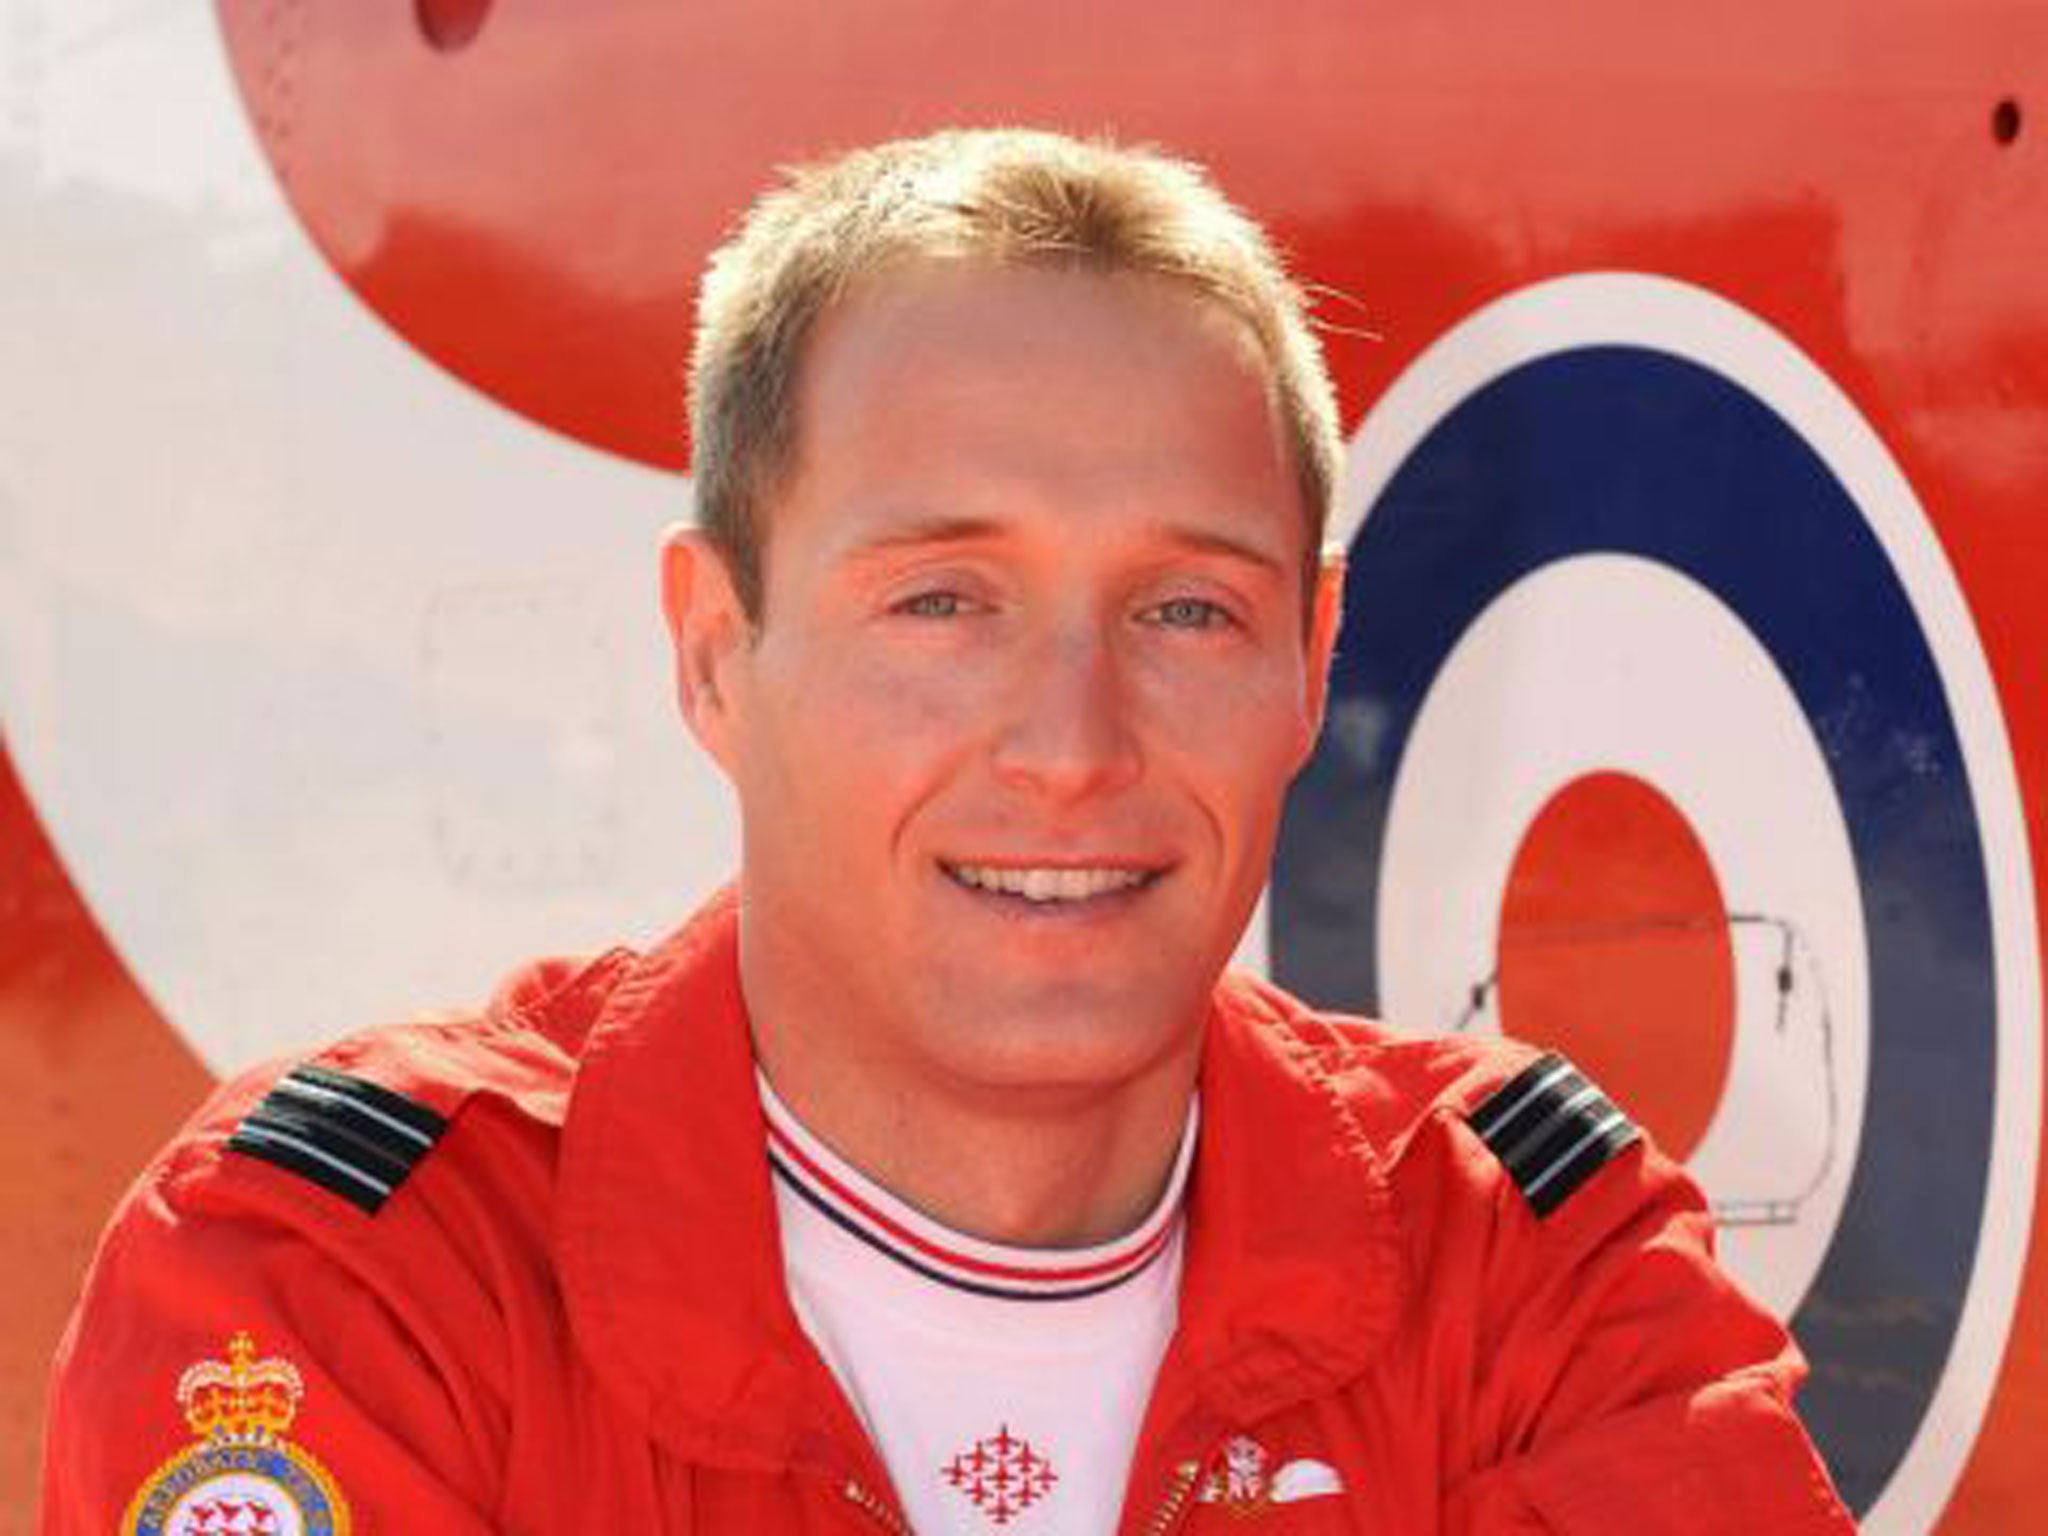 Flight Lieutenant Sean Cunningham was killed in November 2011